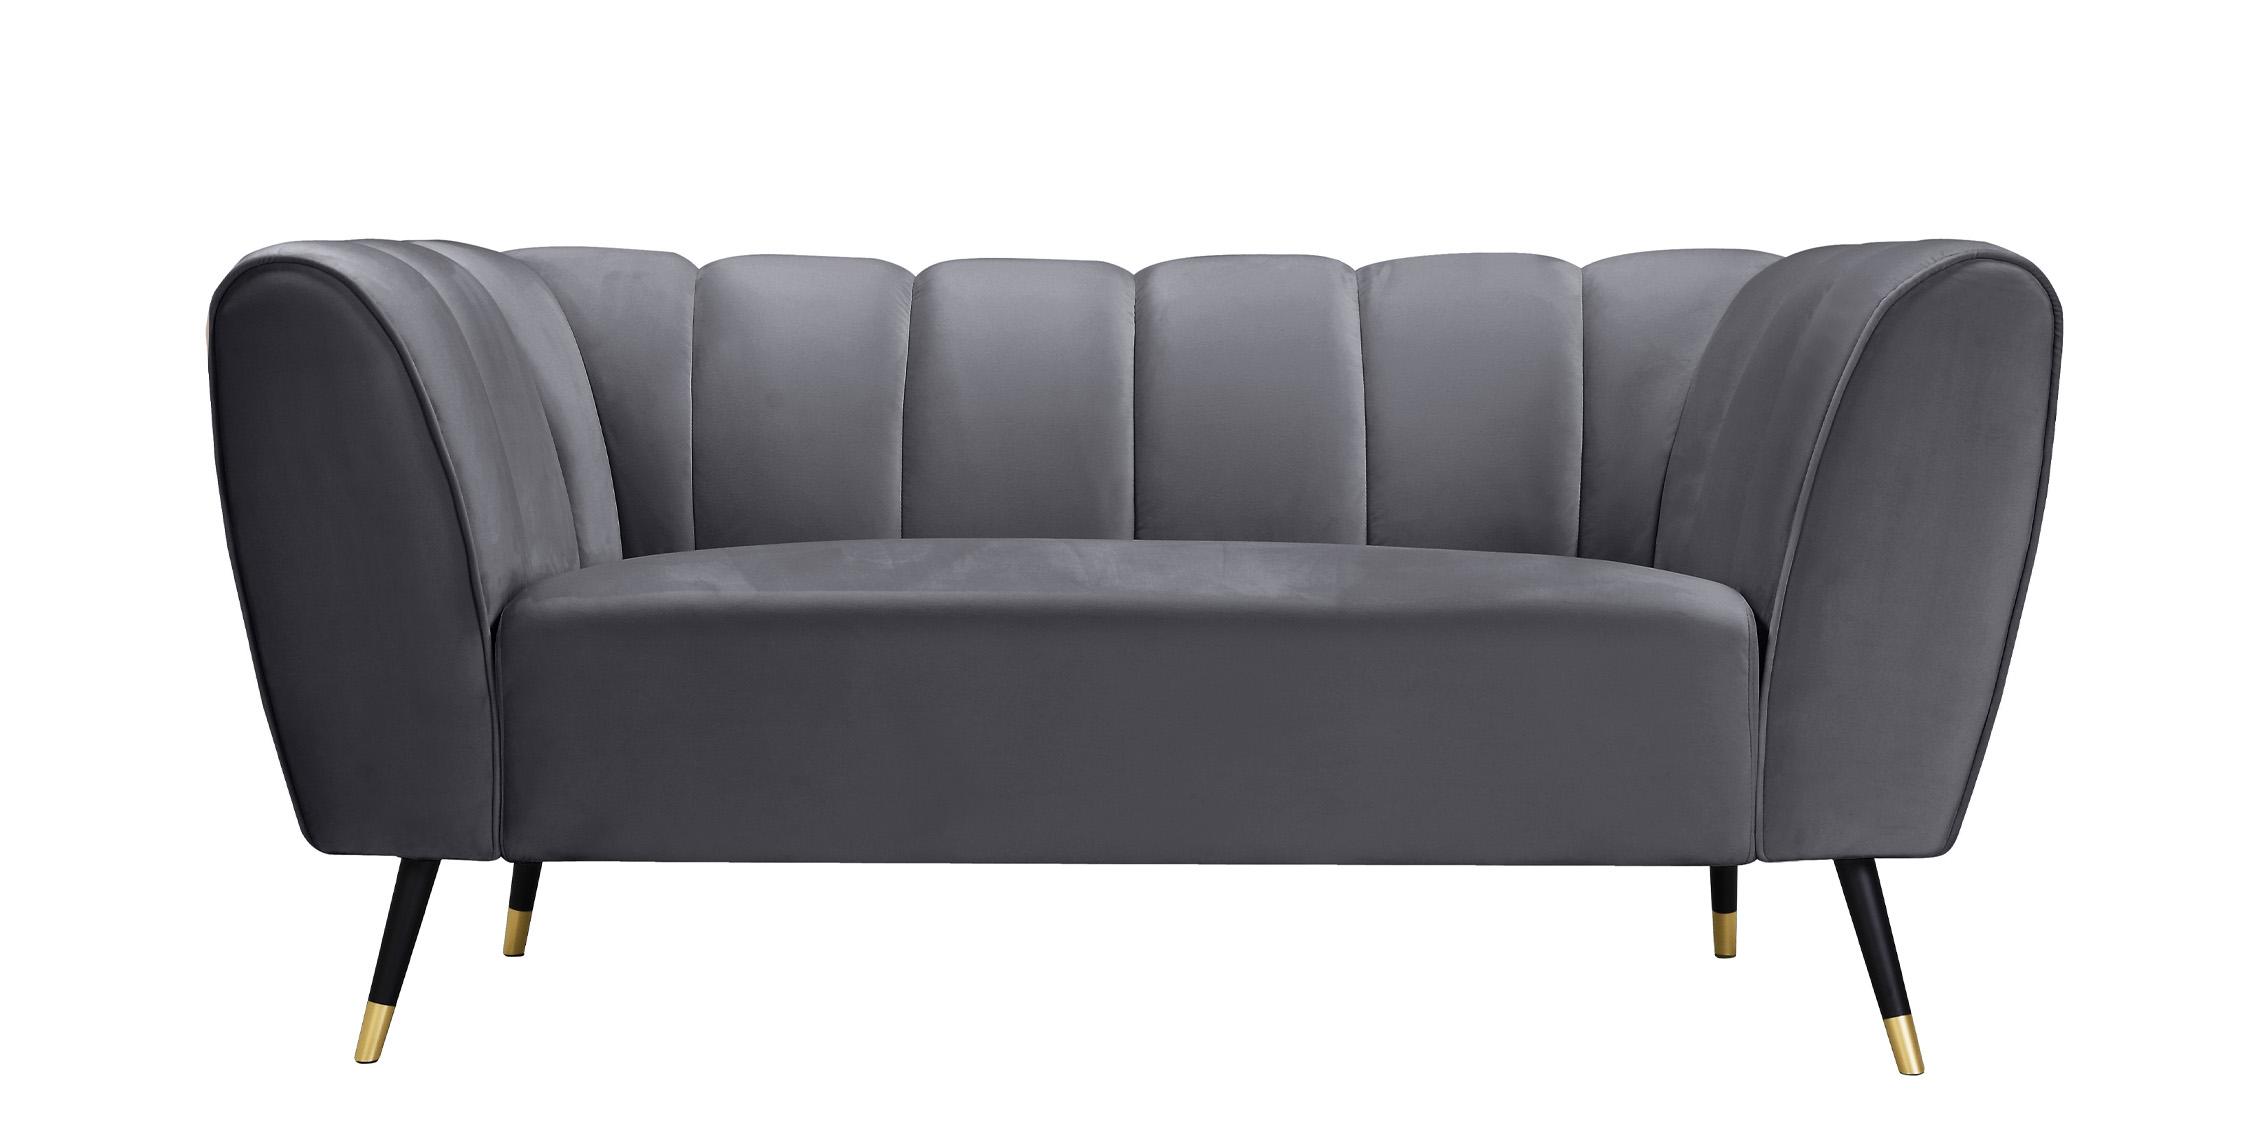 

    
626Grey-S-Set-3 Grey Velvet Channel Tufted Sofa Set 3Pcs BEAUMONT 626Grey Meridian Contemporary
